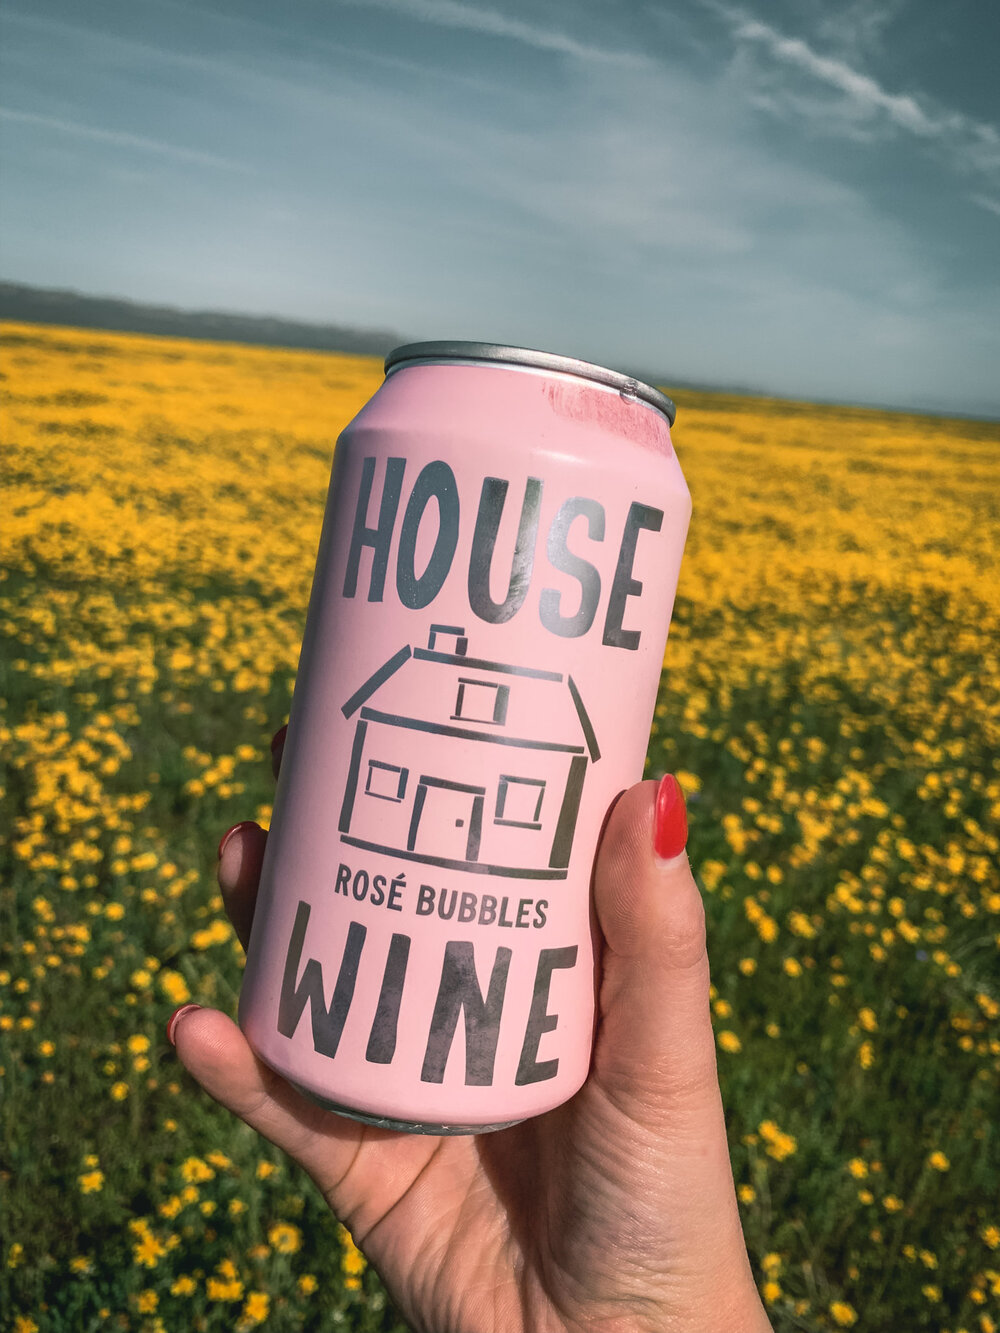 Superbloom & Canned Wine, April 2019_1.jpg